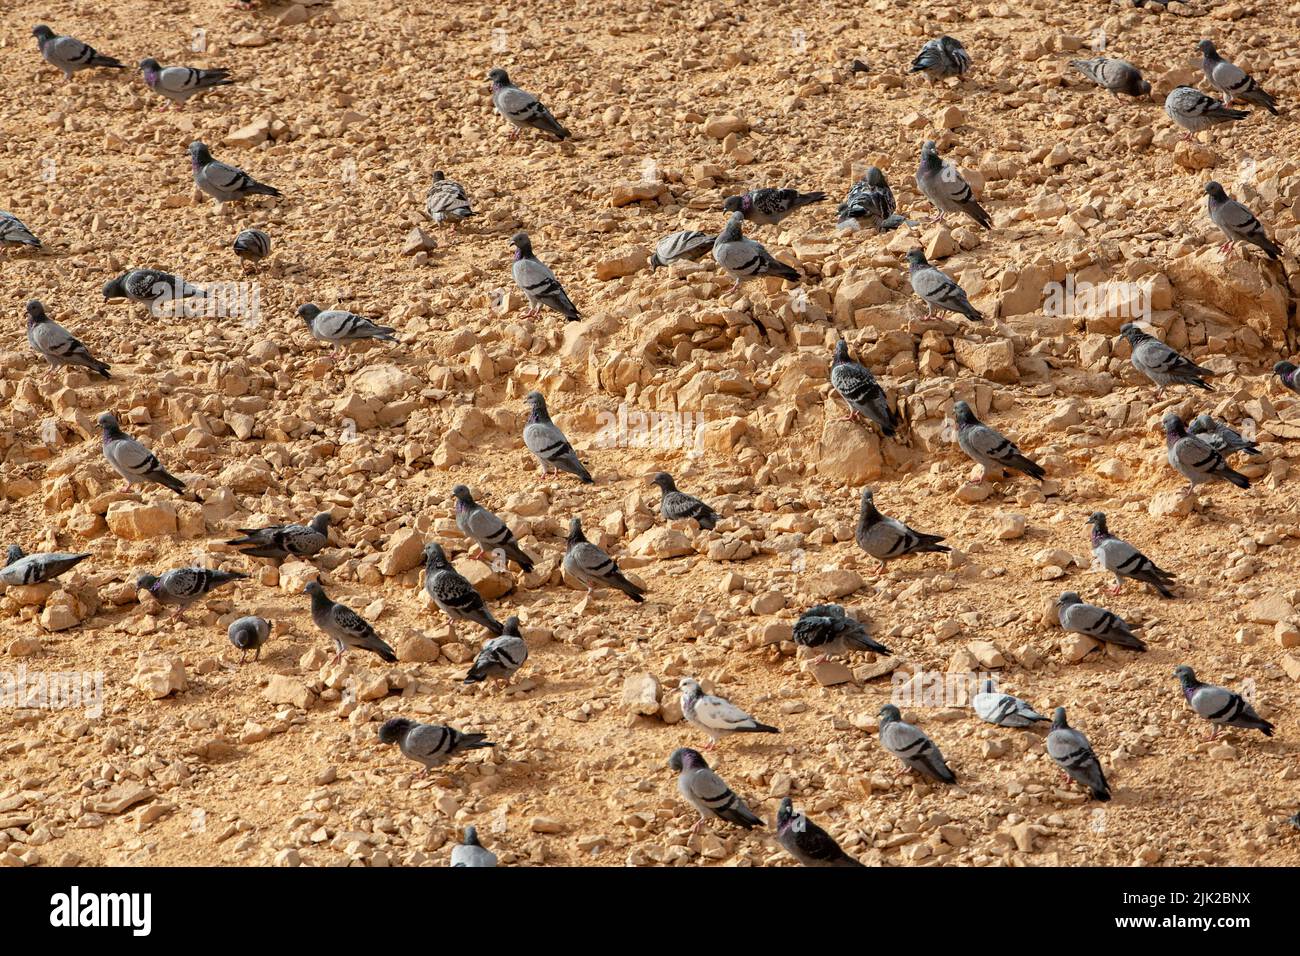 rock dove, rock pigeon, or common pigeon Stock Photo